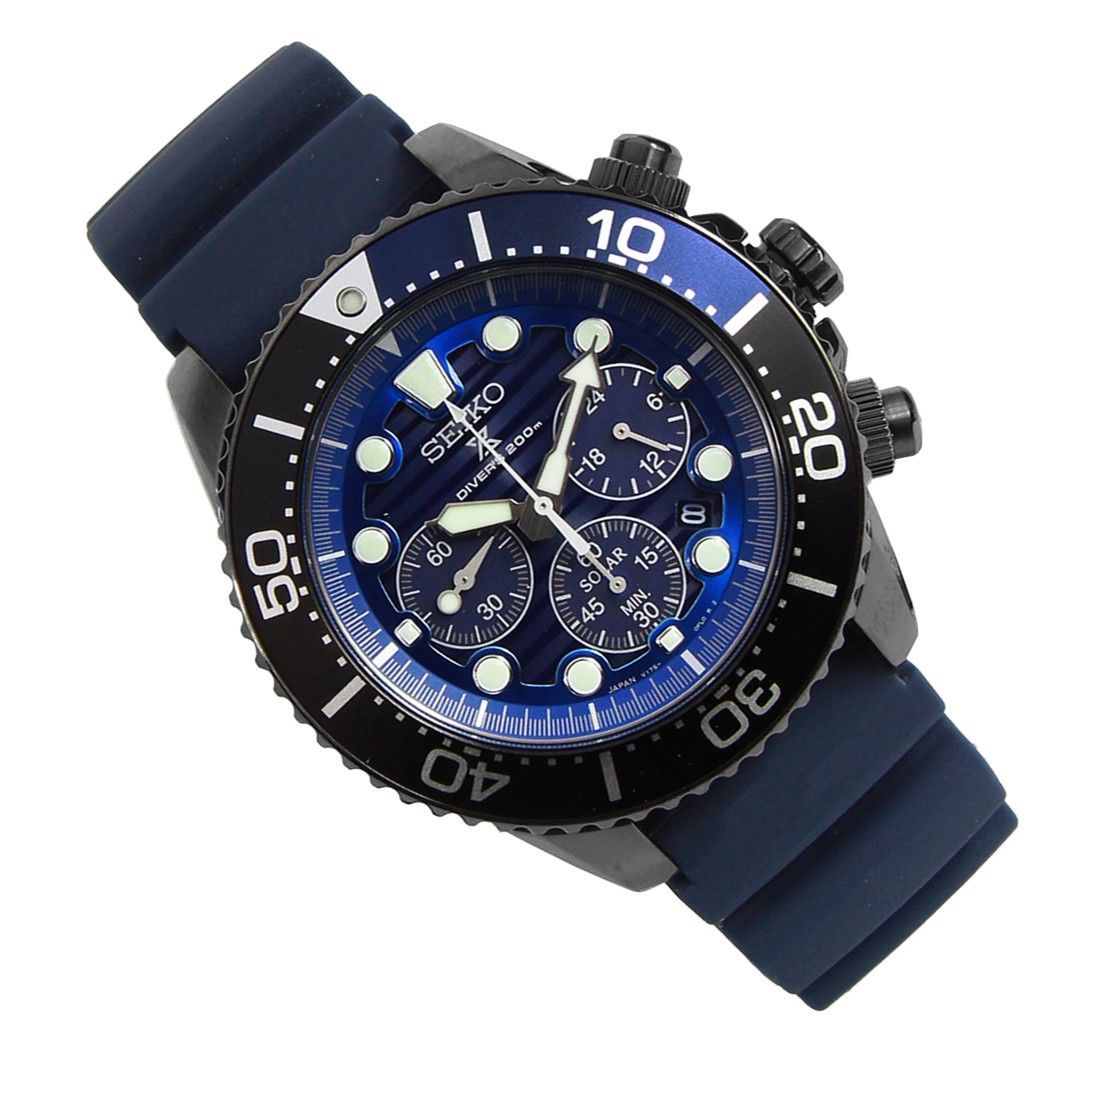 Seiko Solar Prospex SBDL057 Blue Rubber Chronograph Diving Watch -Seiko